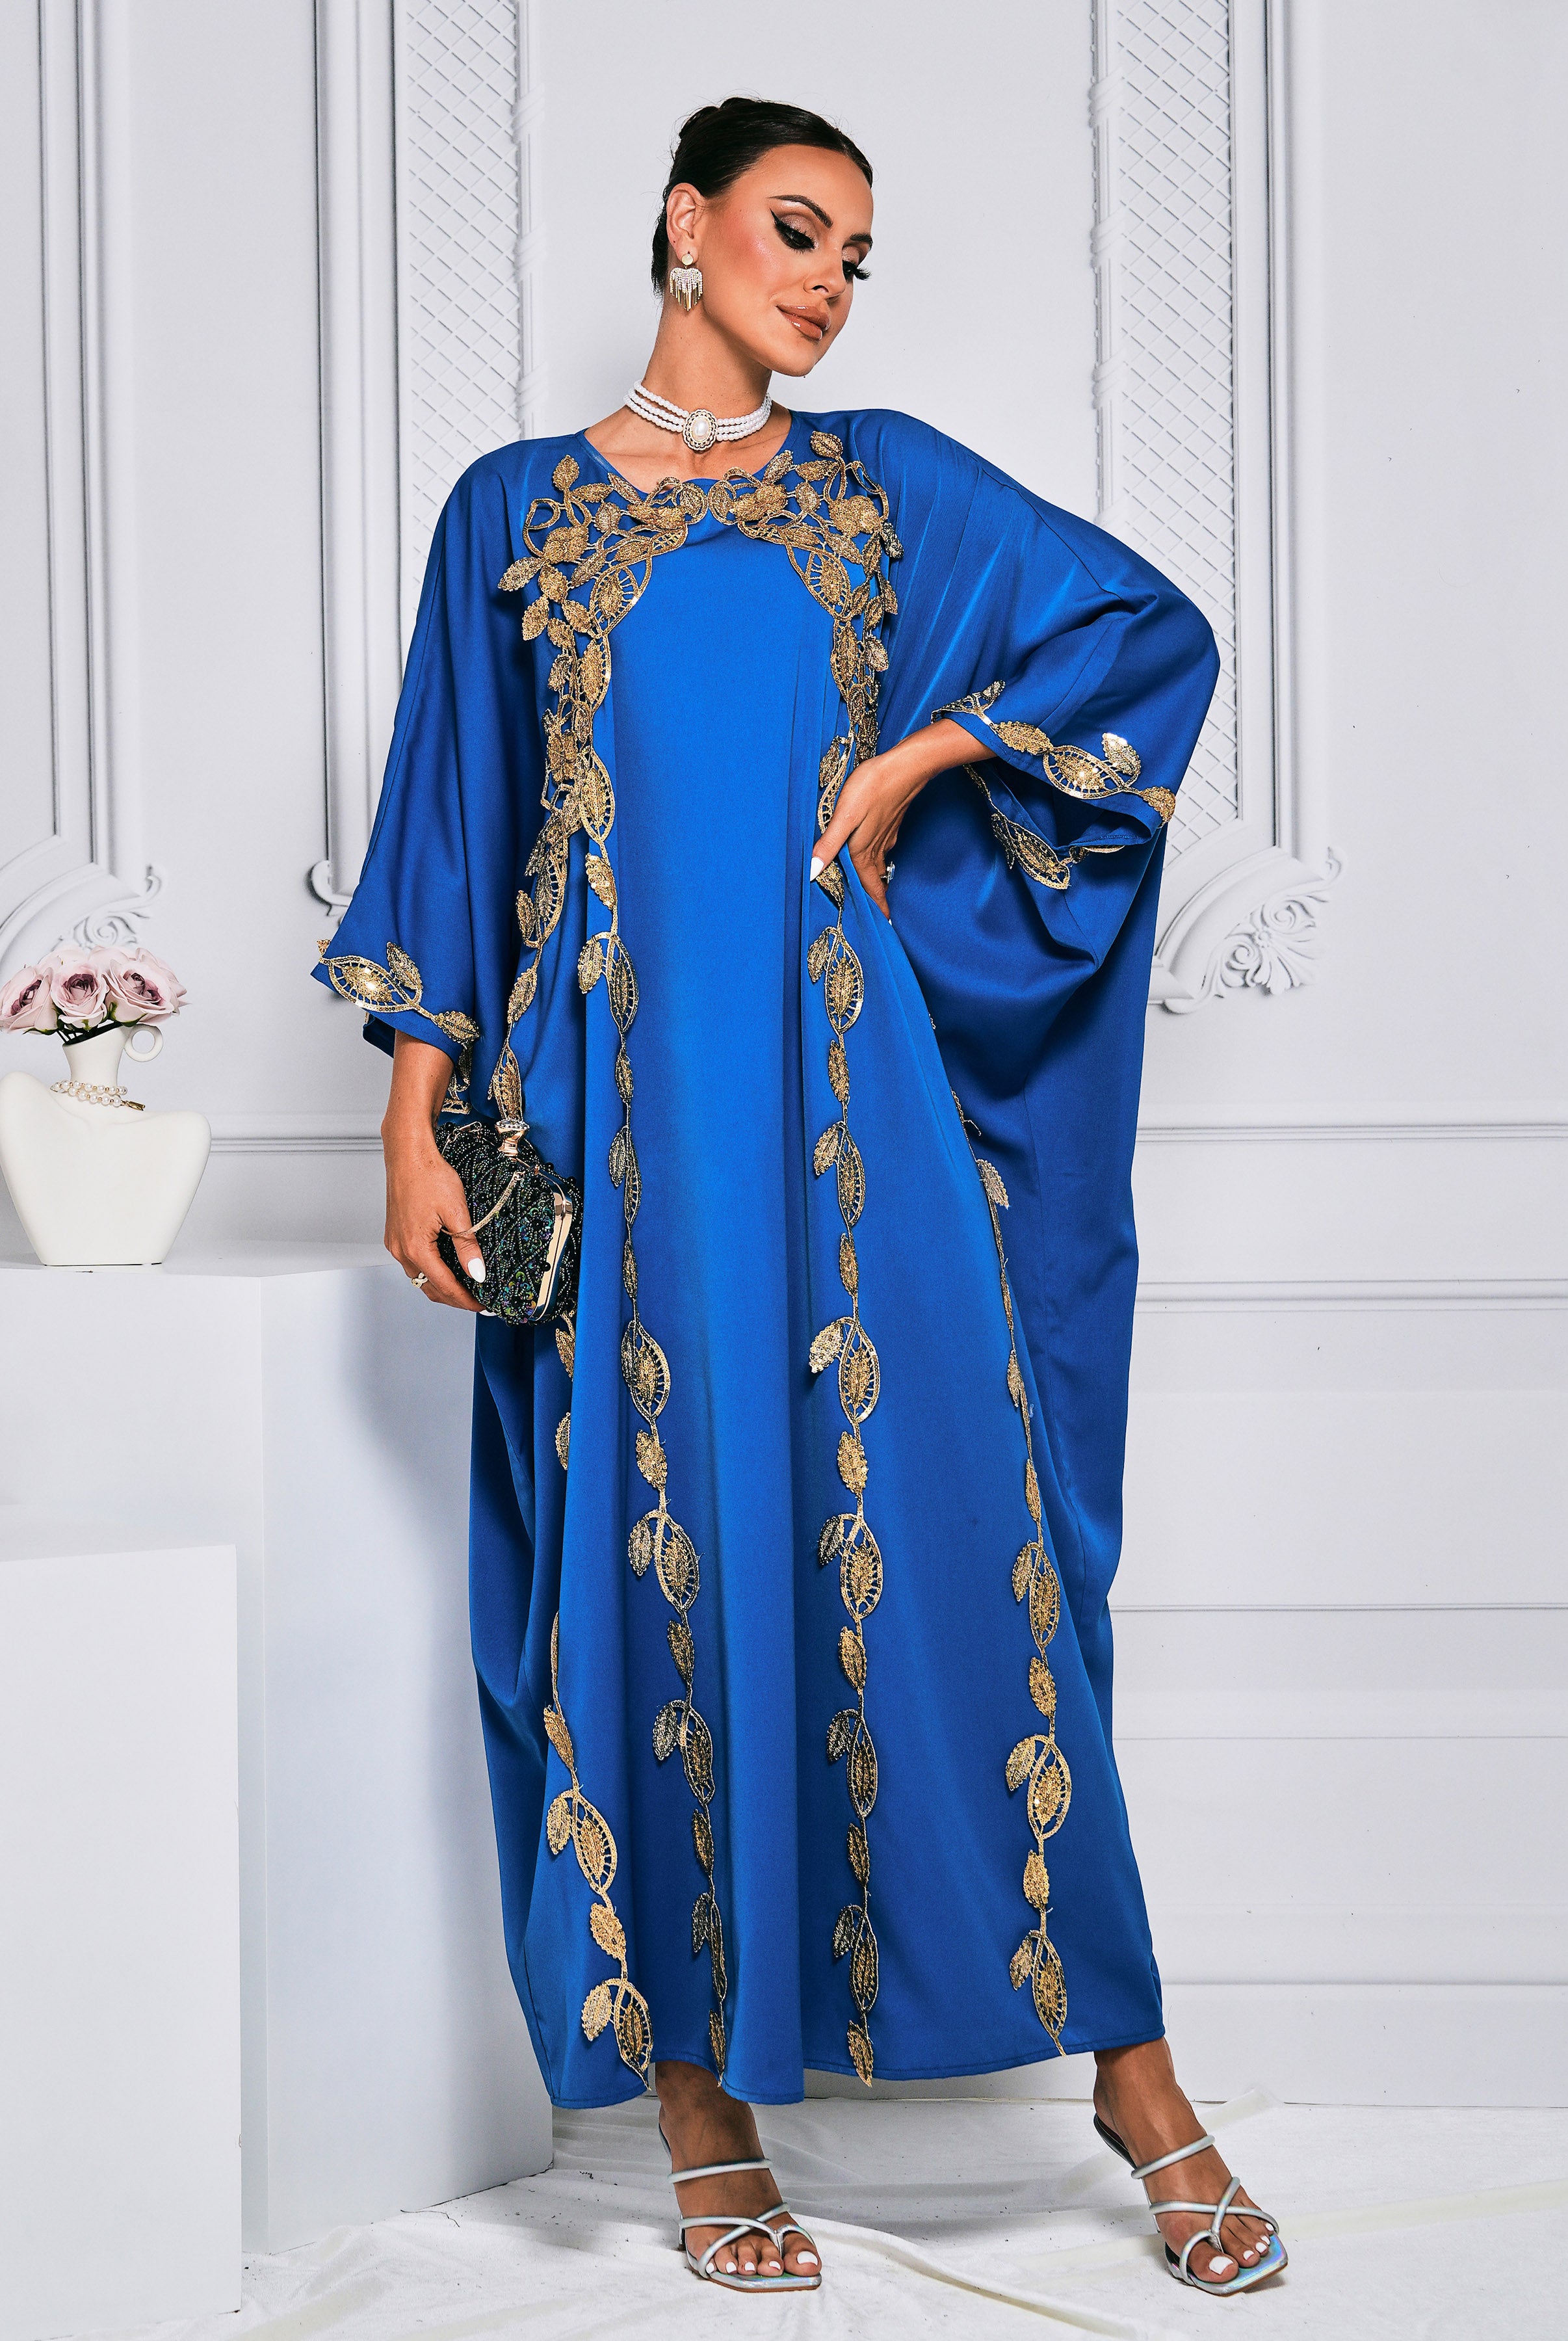 MISSORD Bat Cape Embroidered Applique Muslim Dress